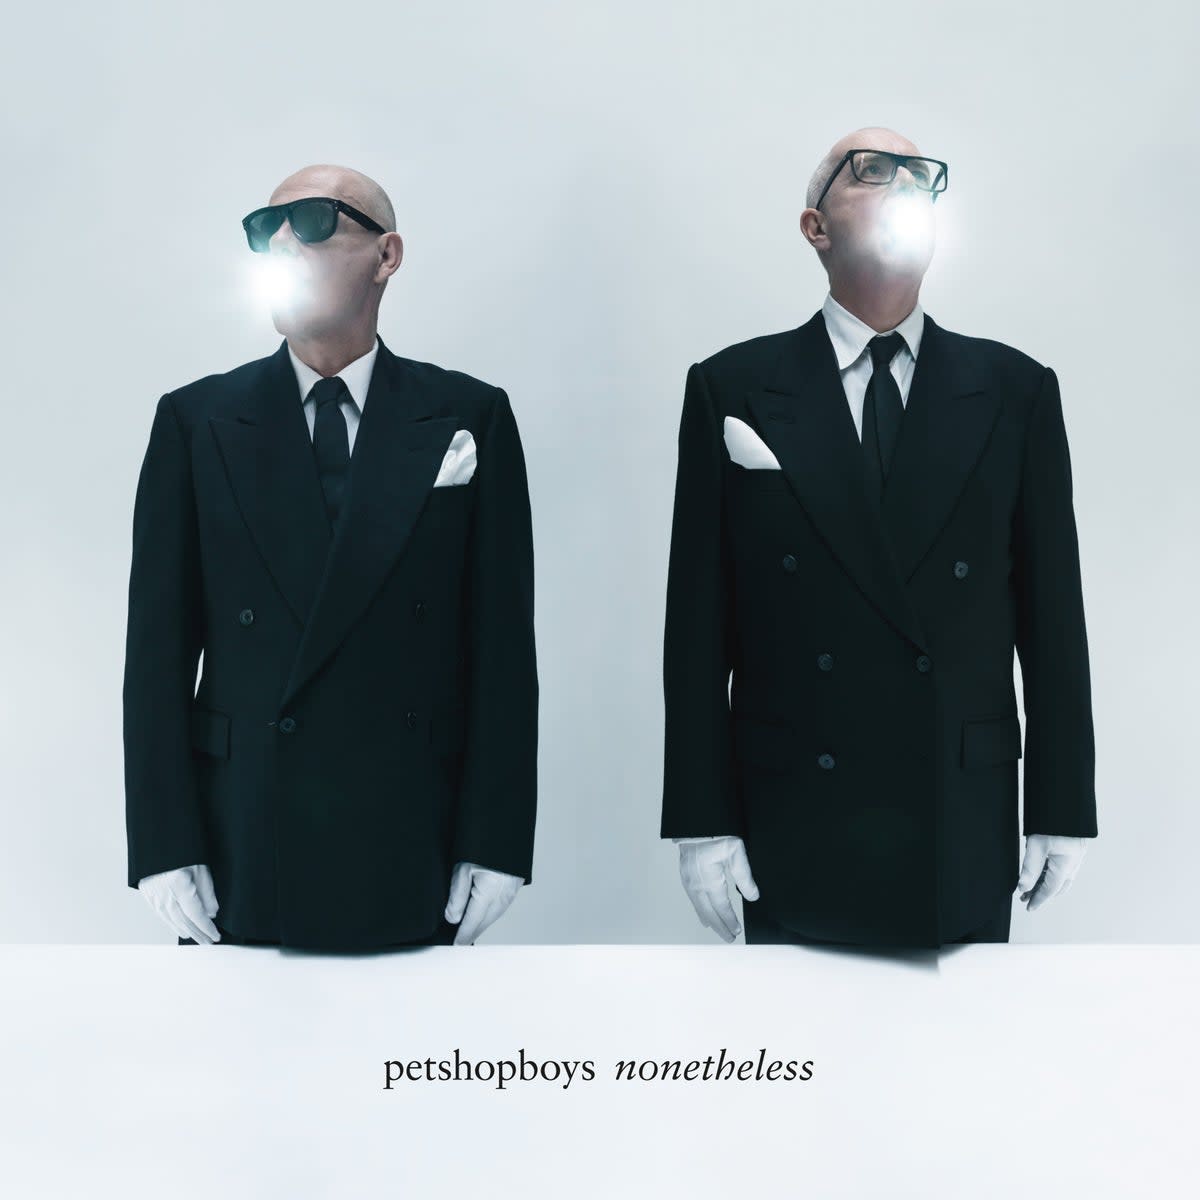 Cover art for the new Pet Shop Boys album, Nonetheless (Tim Walker)